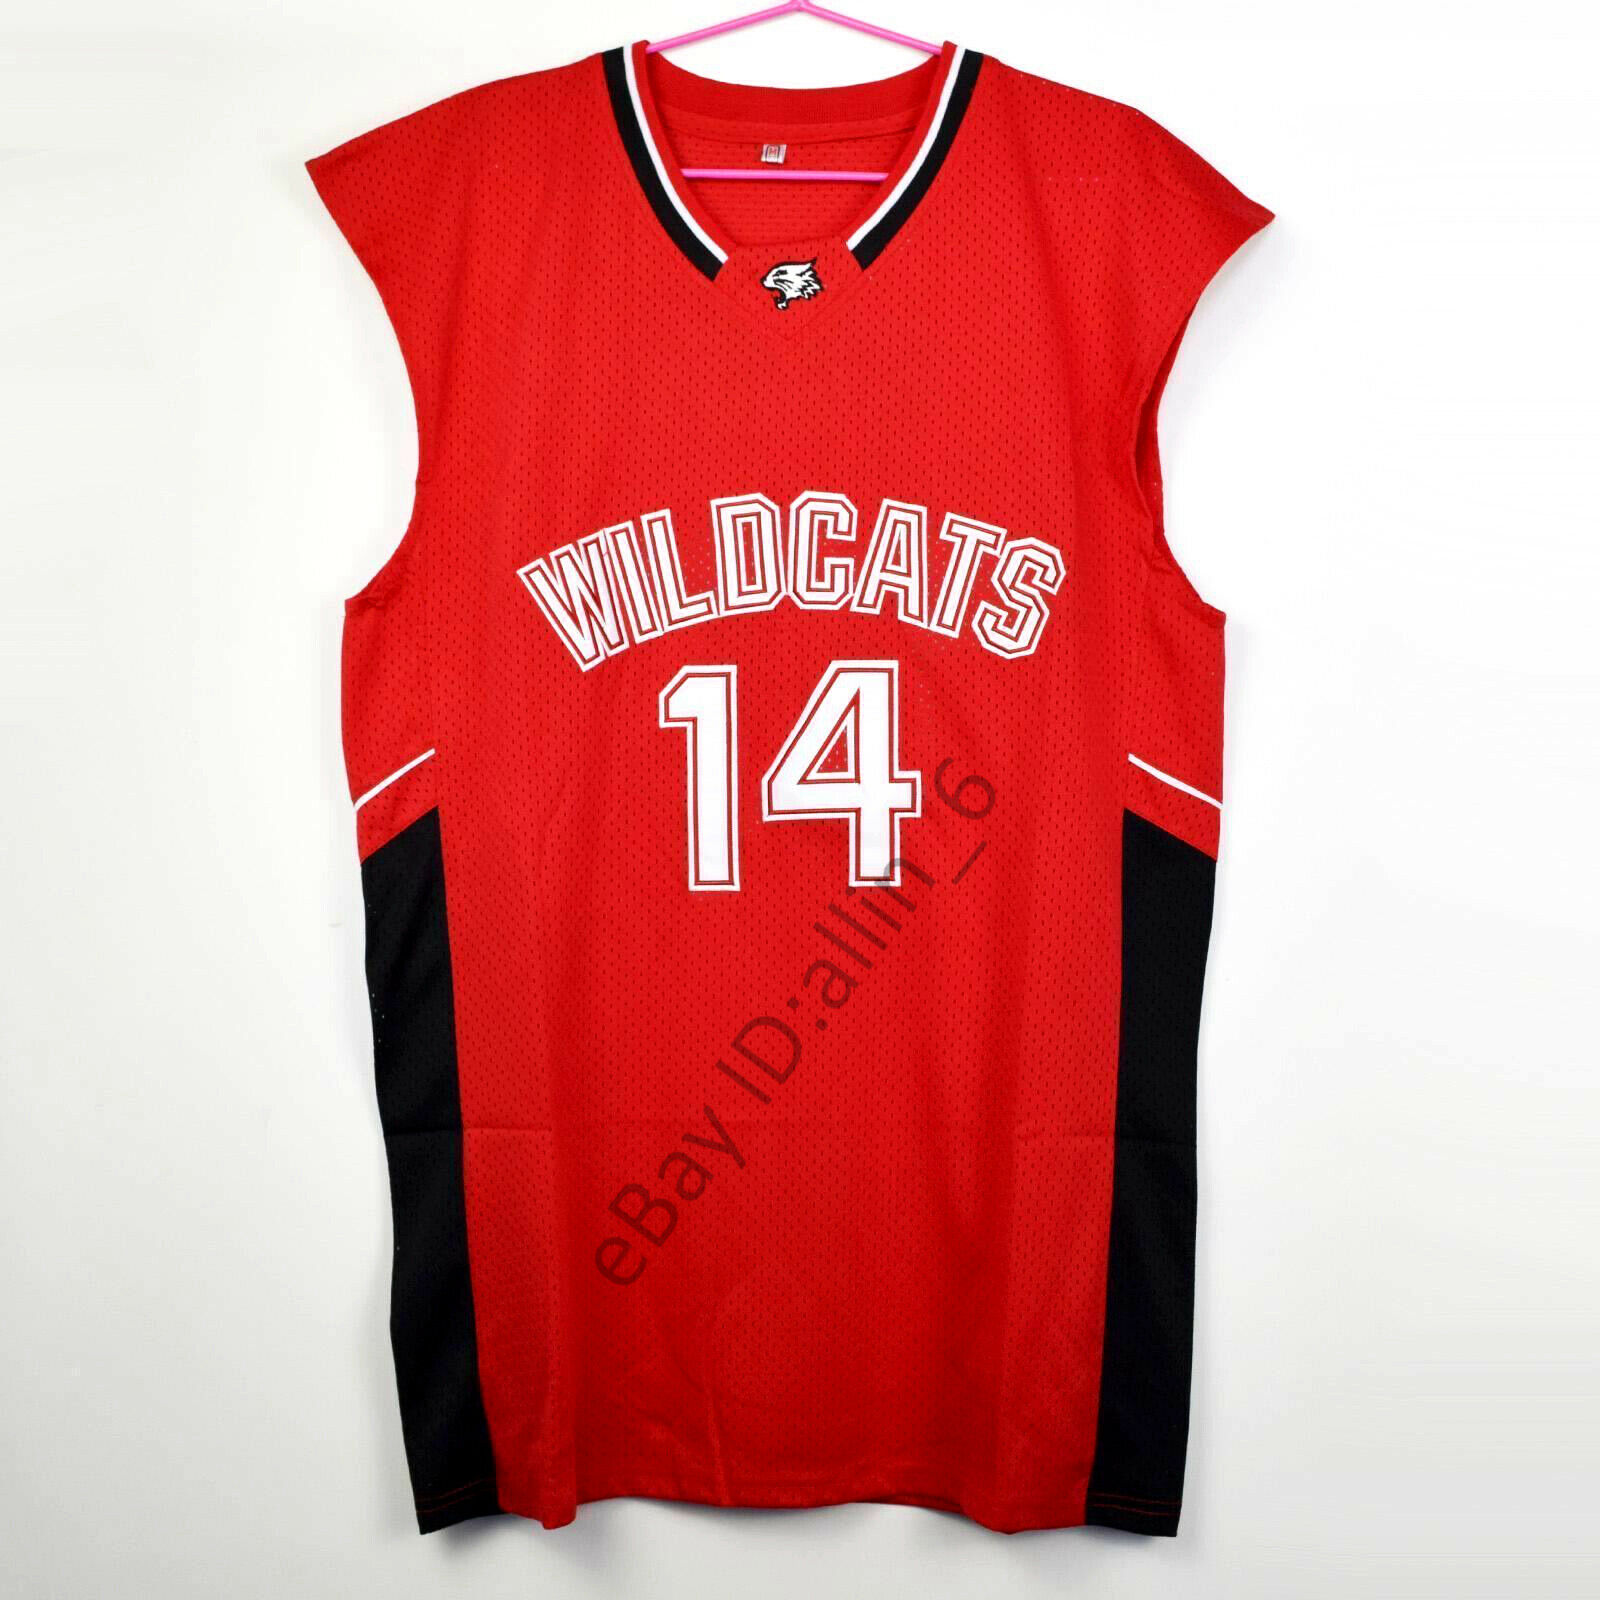 Zac Efron #14 Troy Bolton East High School Wildcats Men's Basketball Jersey